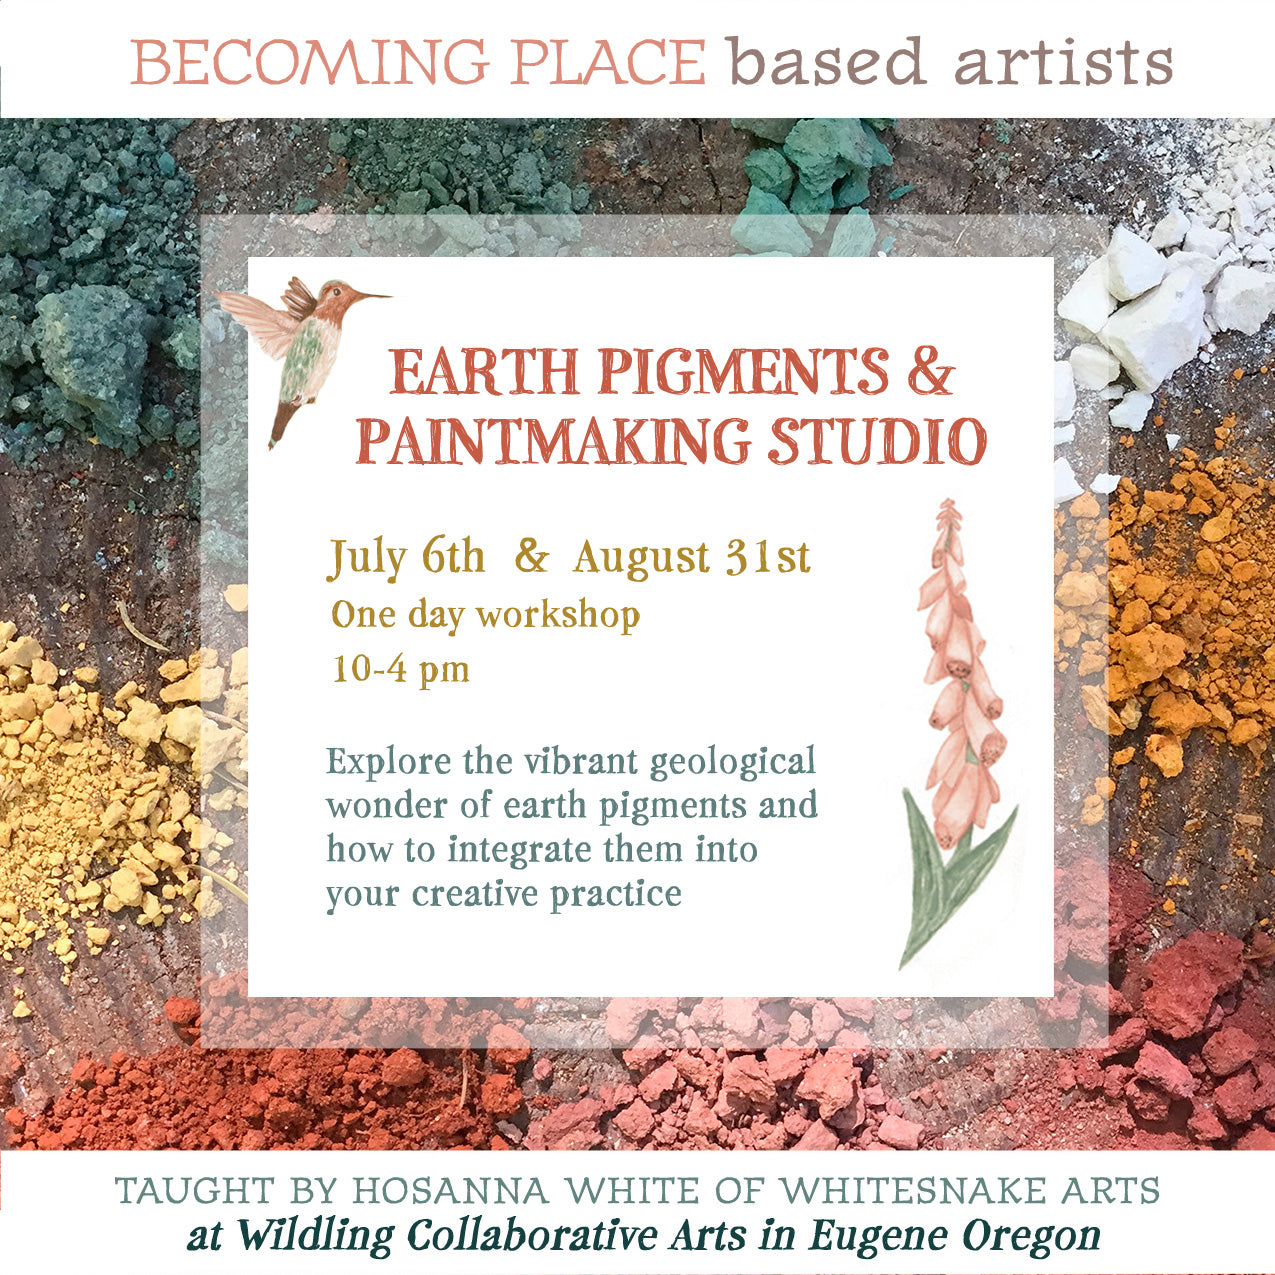 Earth Pigments & Paintmaking Studio